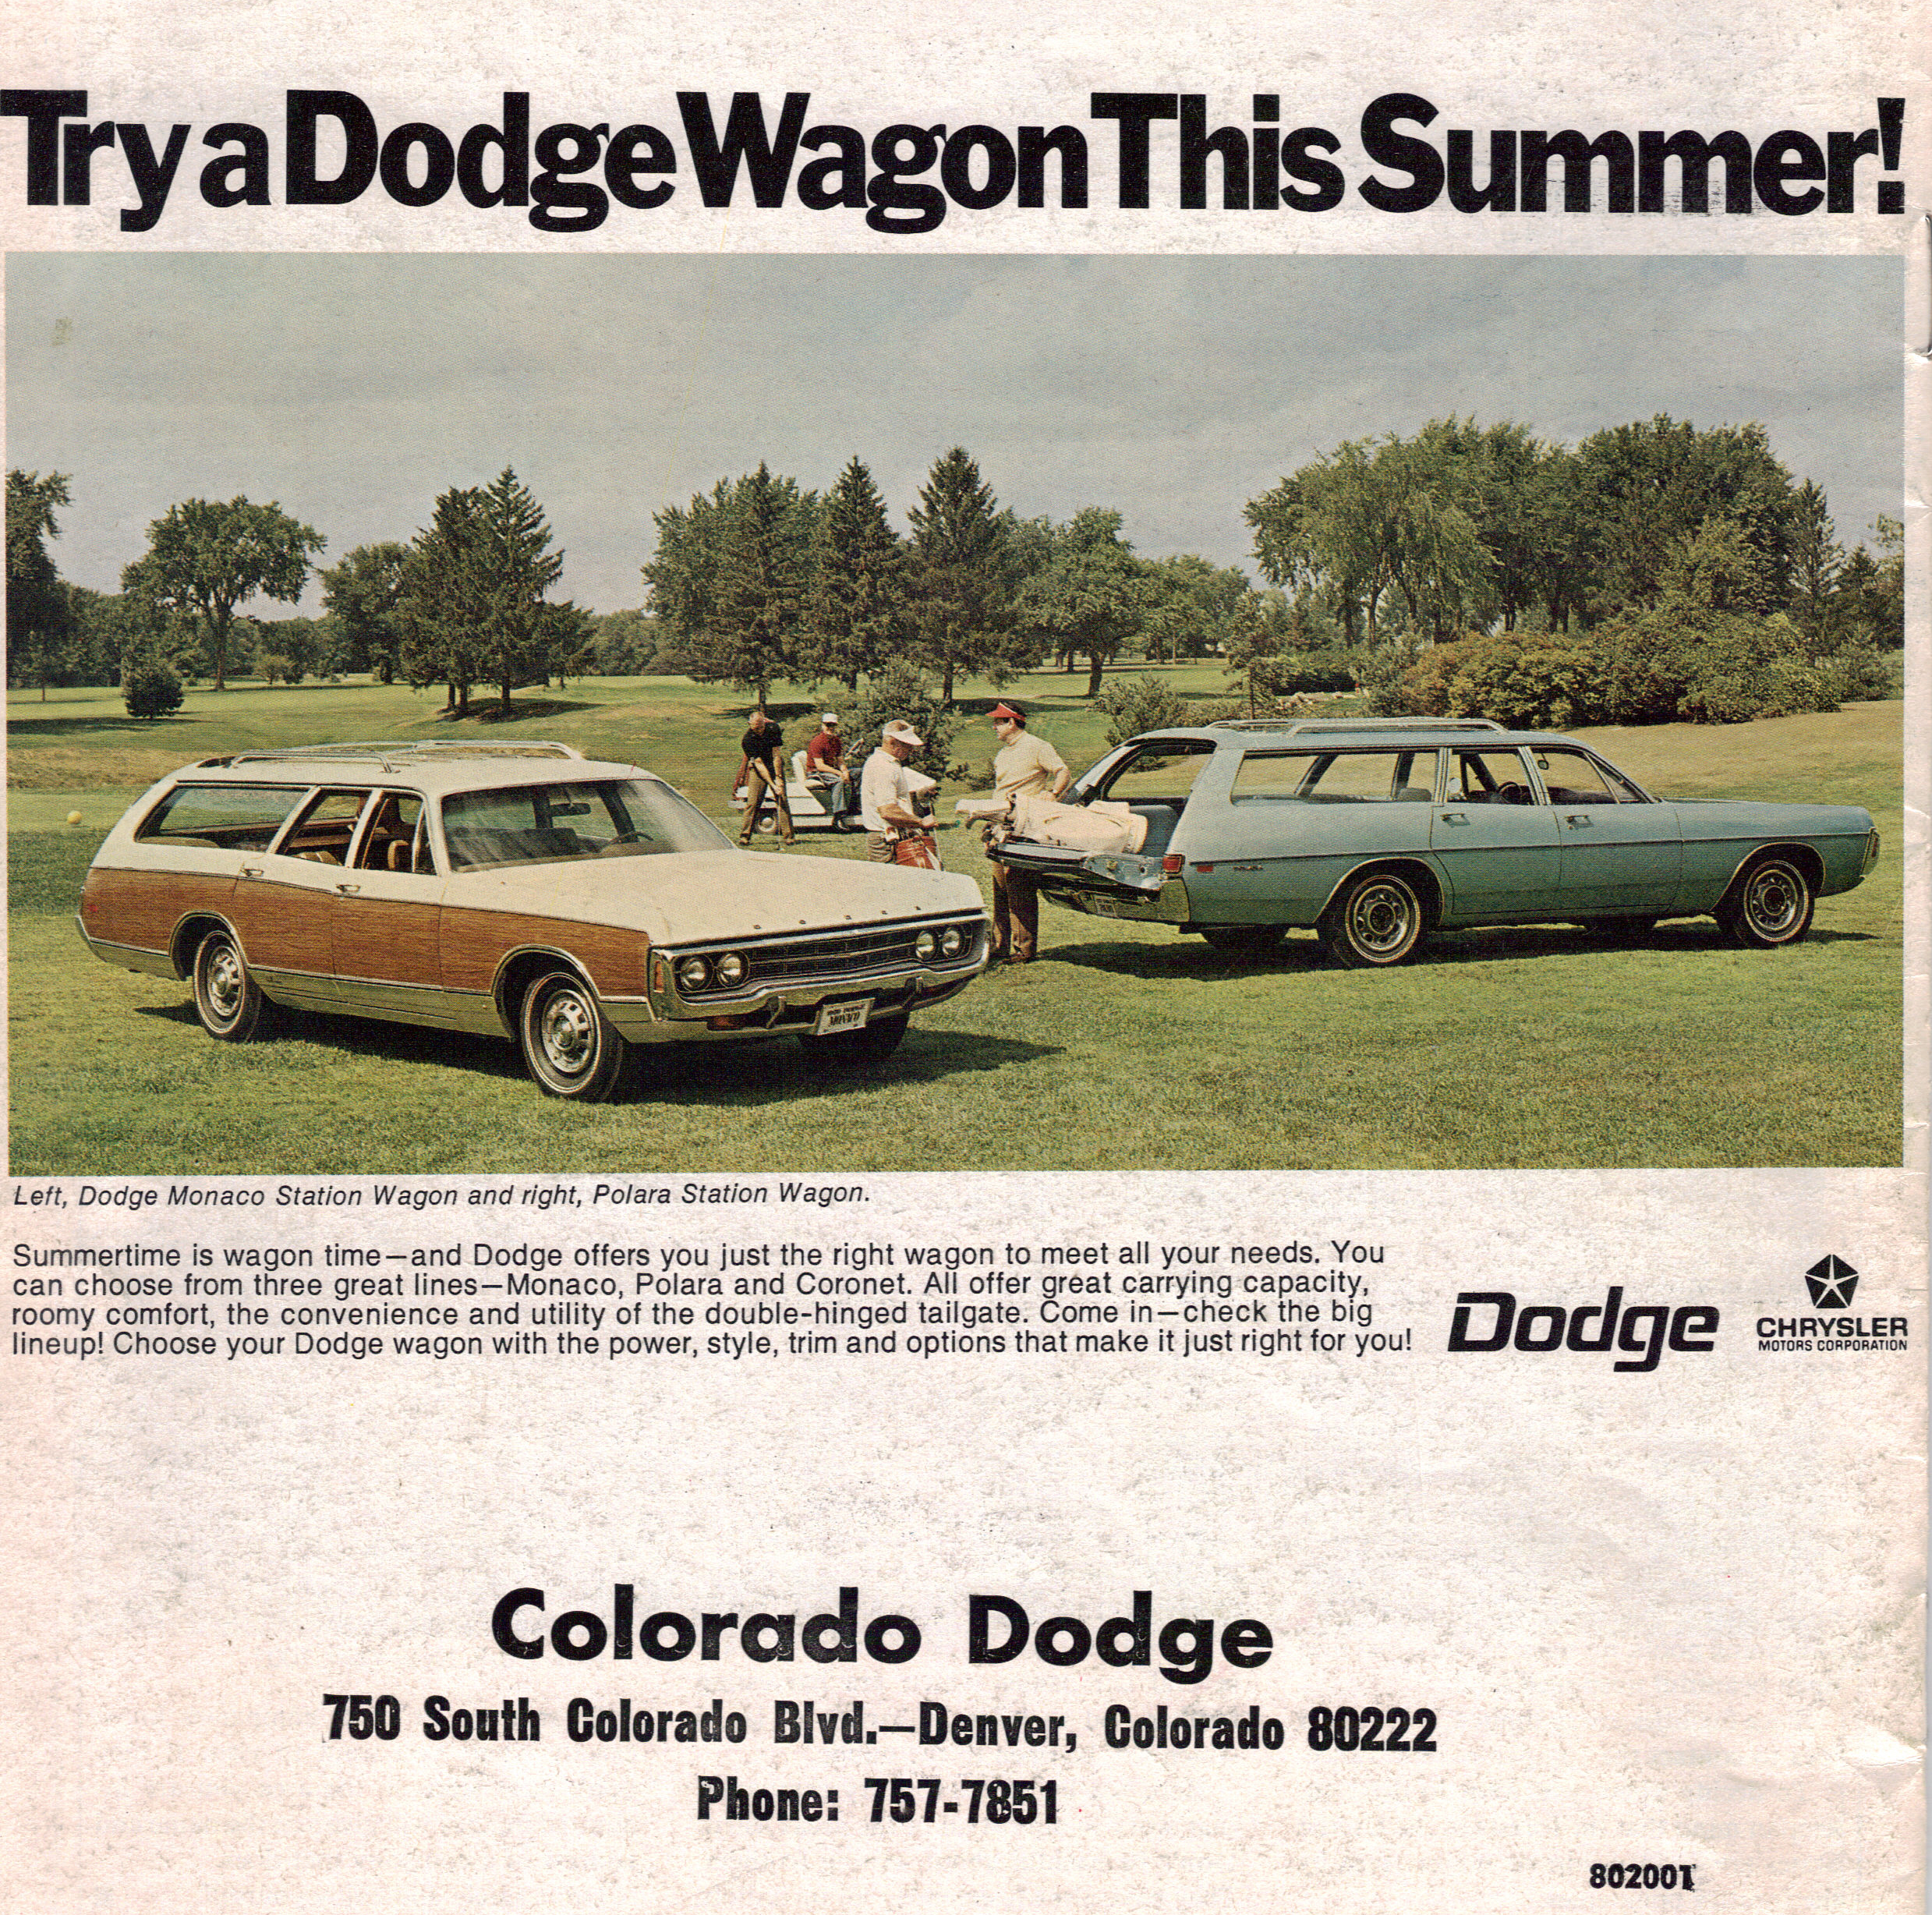 1970 Dodge Monaco & Polara Station Wagons | Flickr - Photo Sharing!